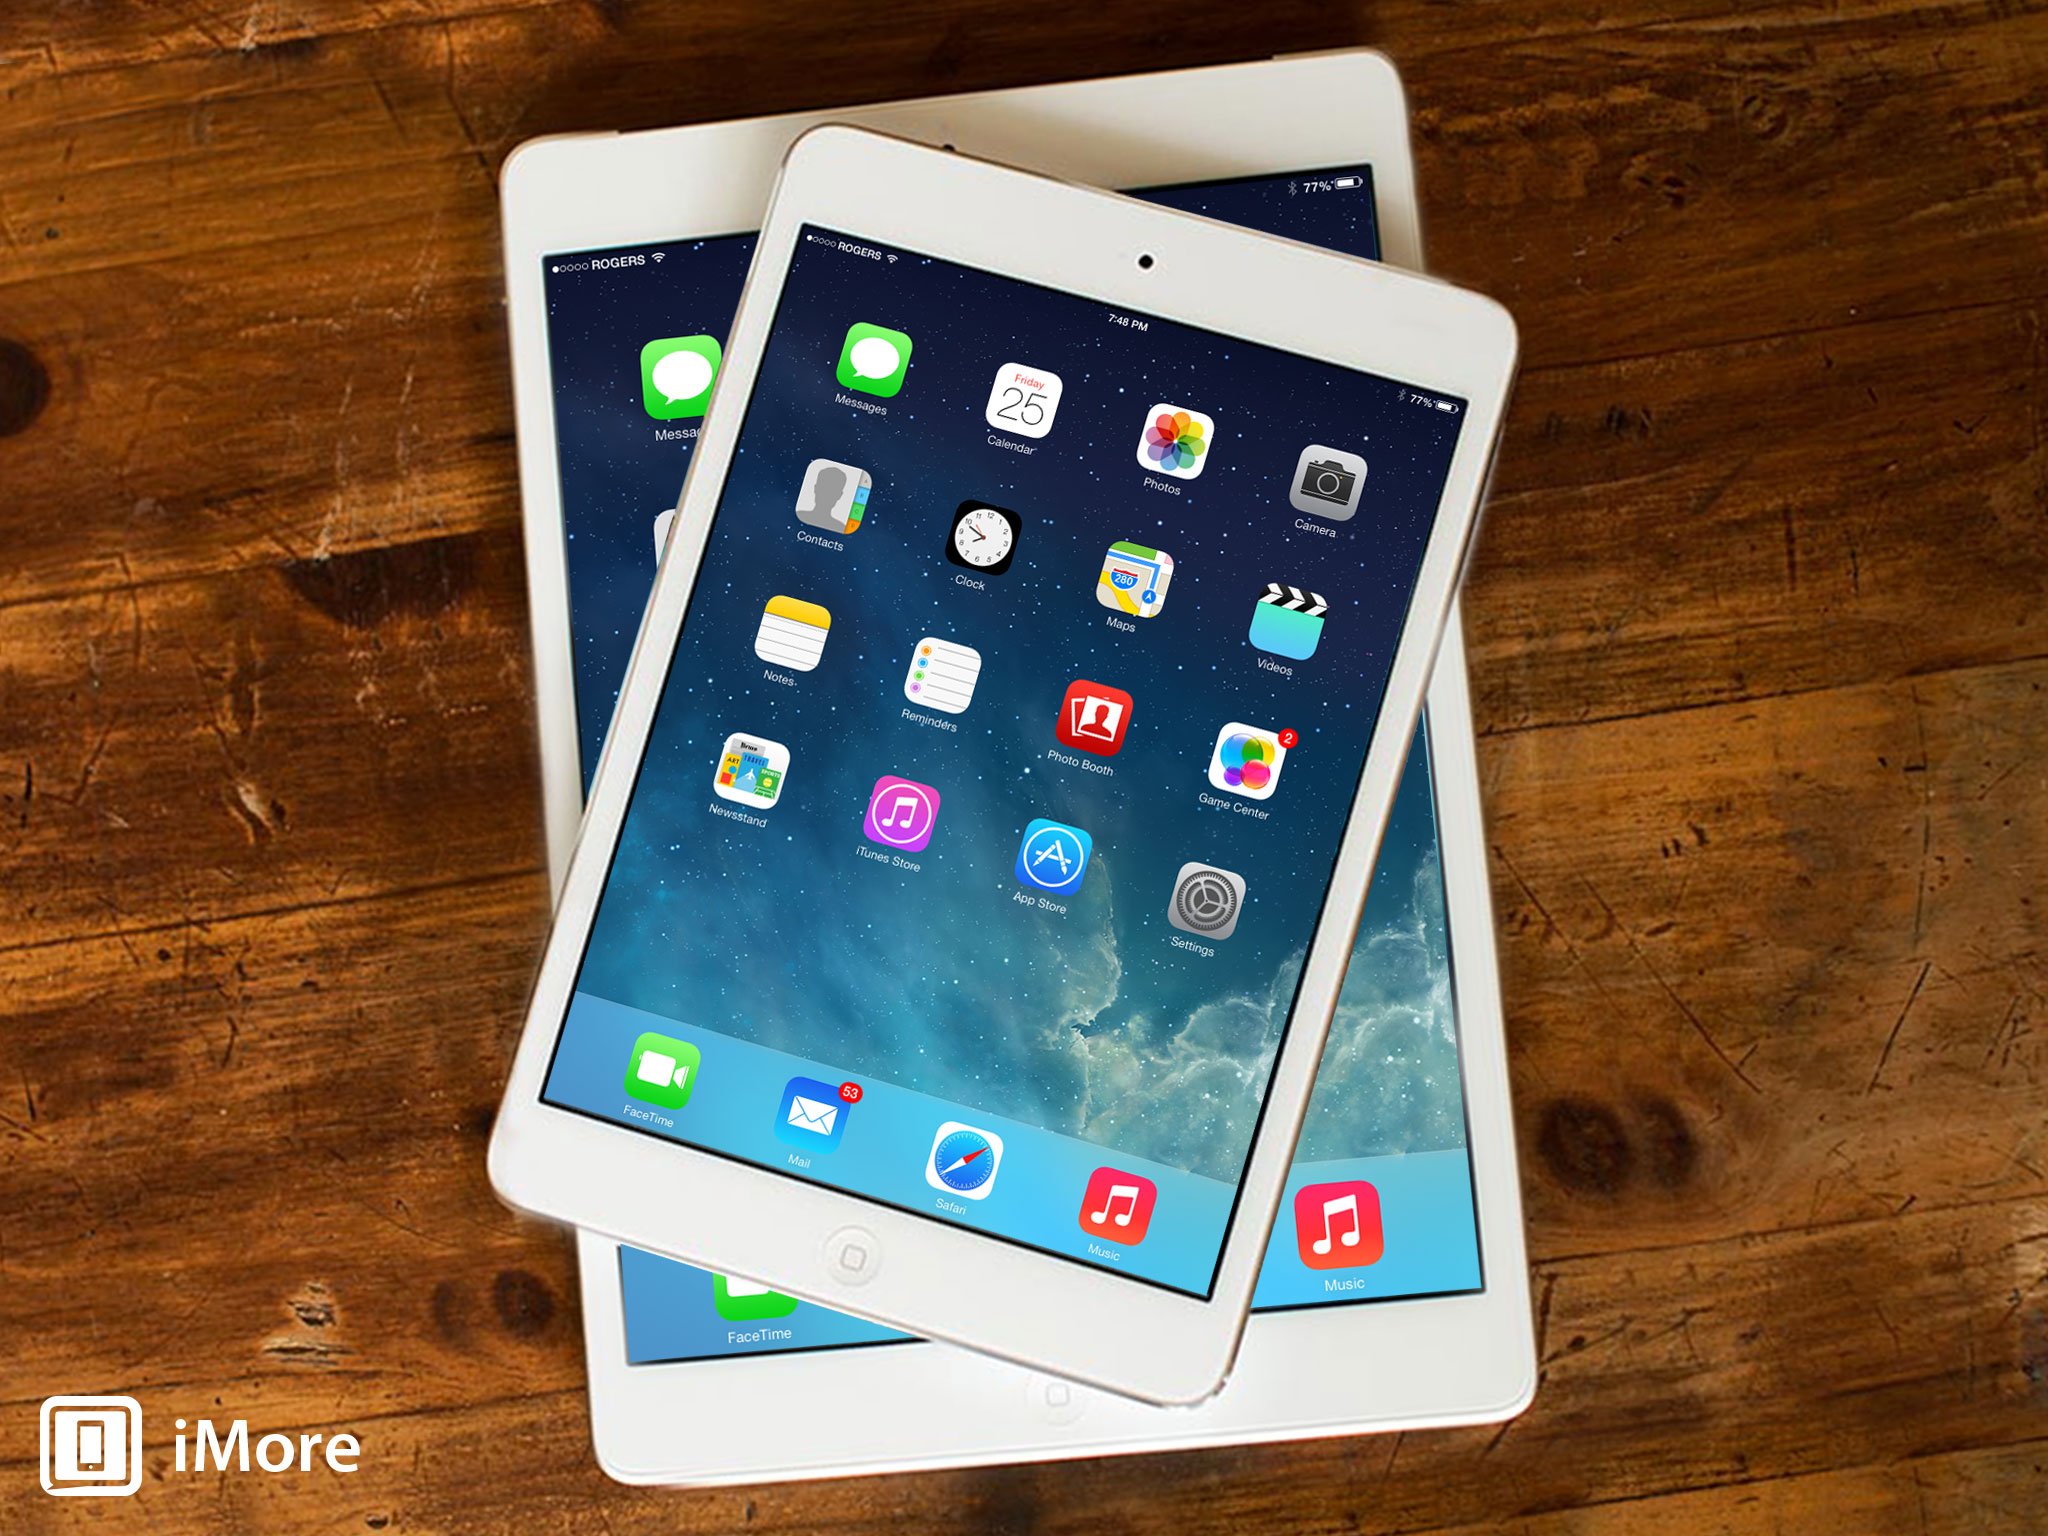 iPad Air and Retina iPad mini: Should you upgrade?